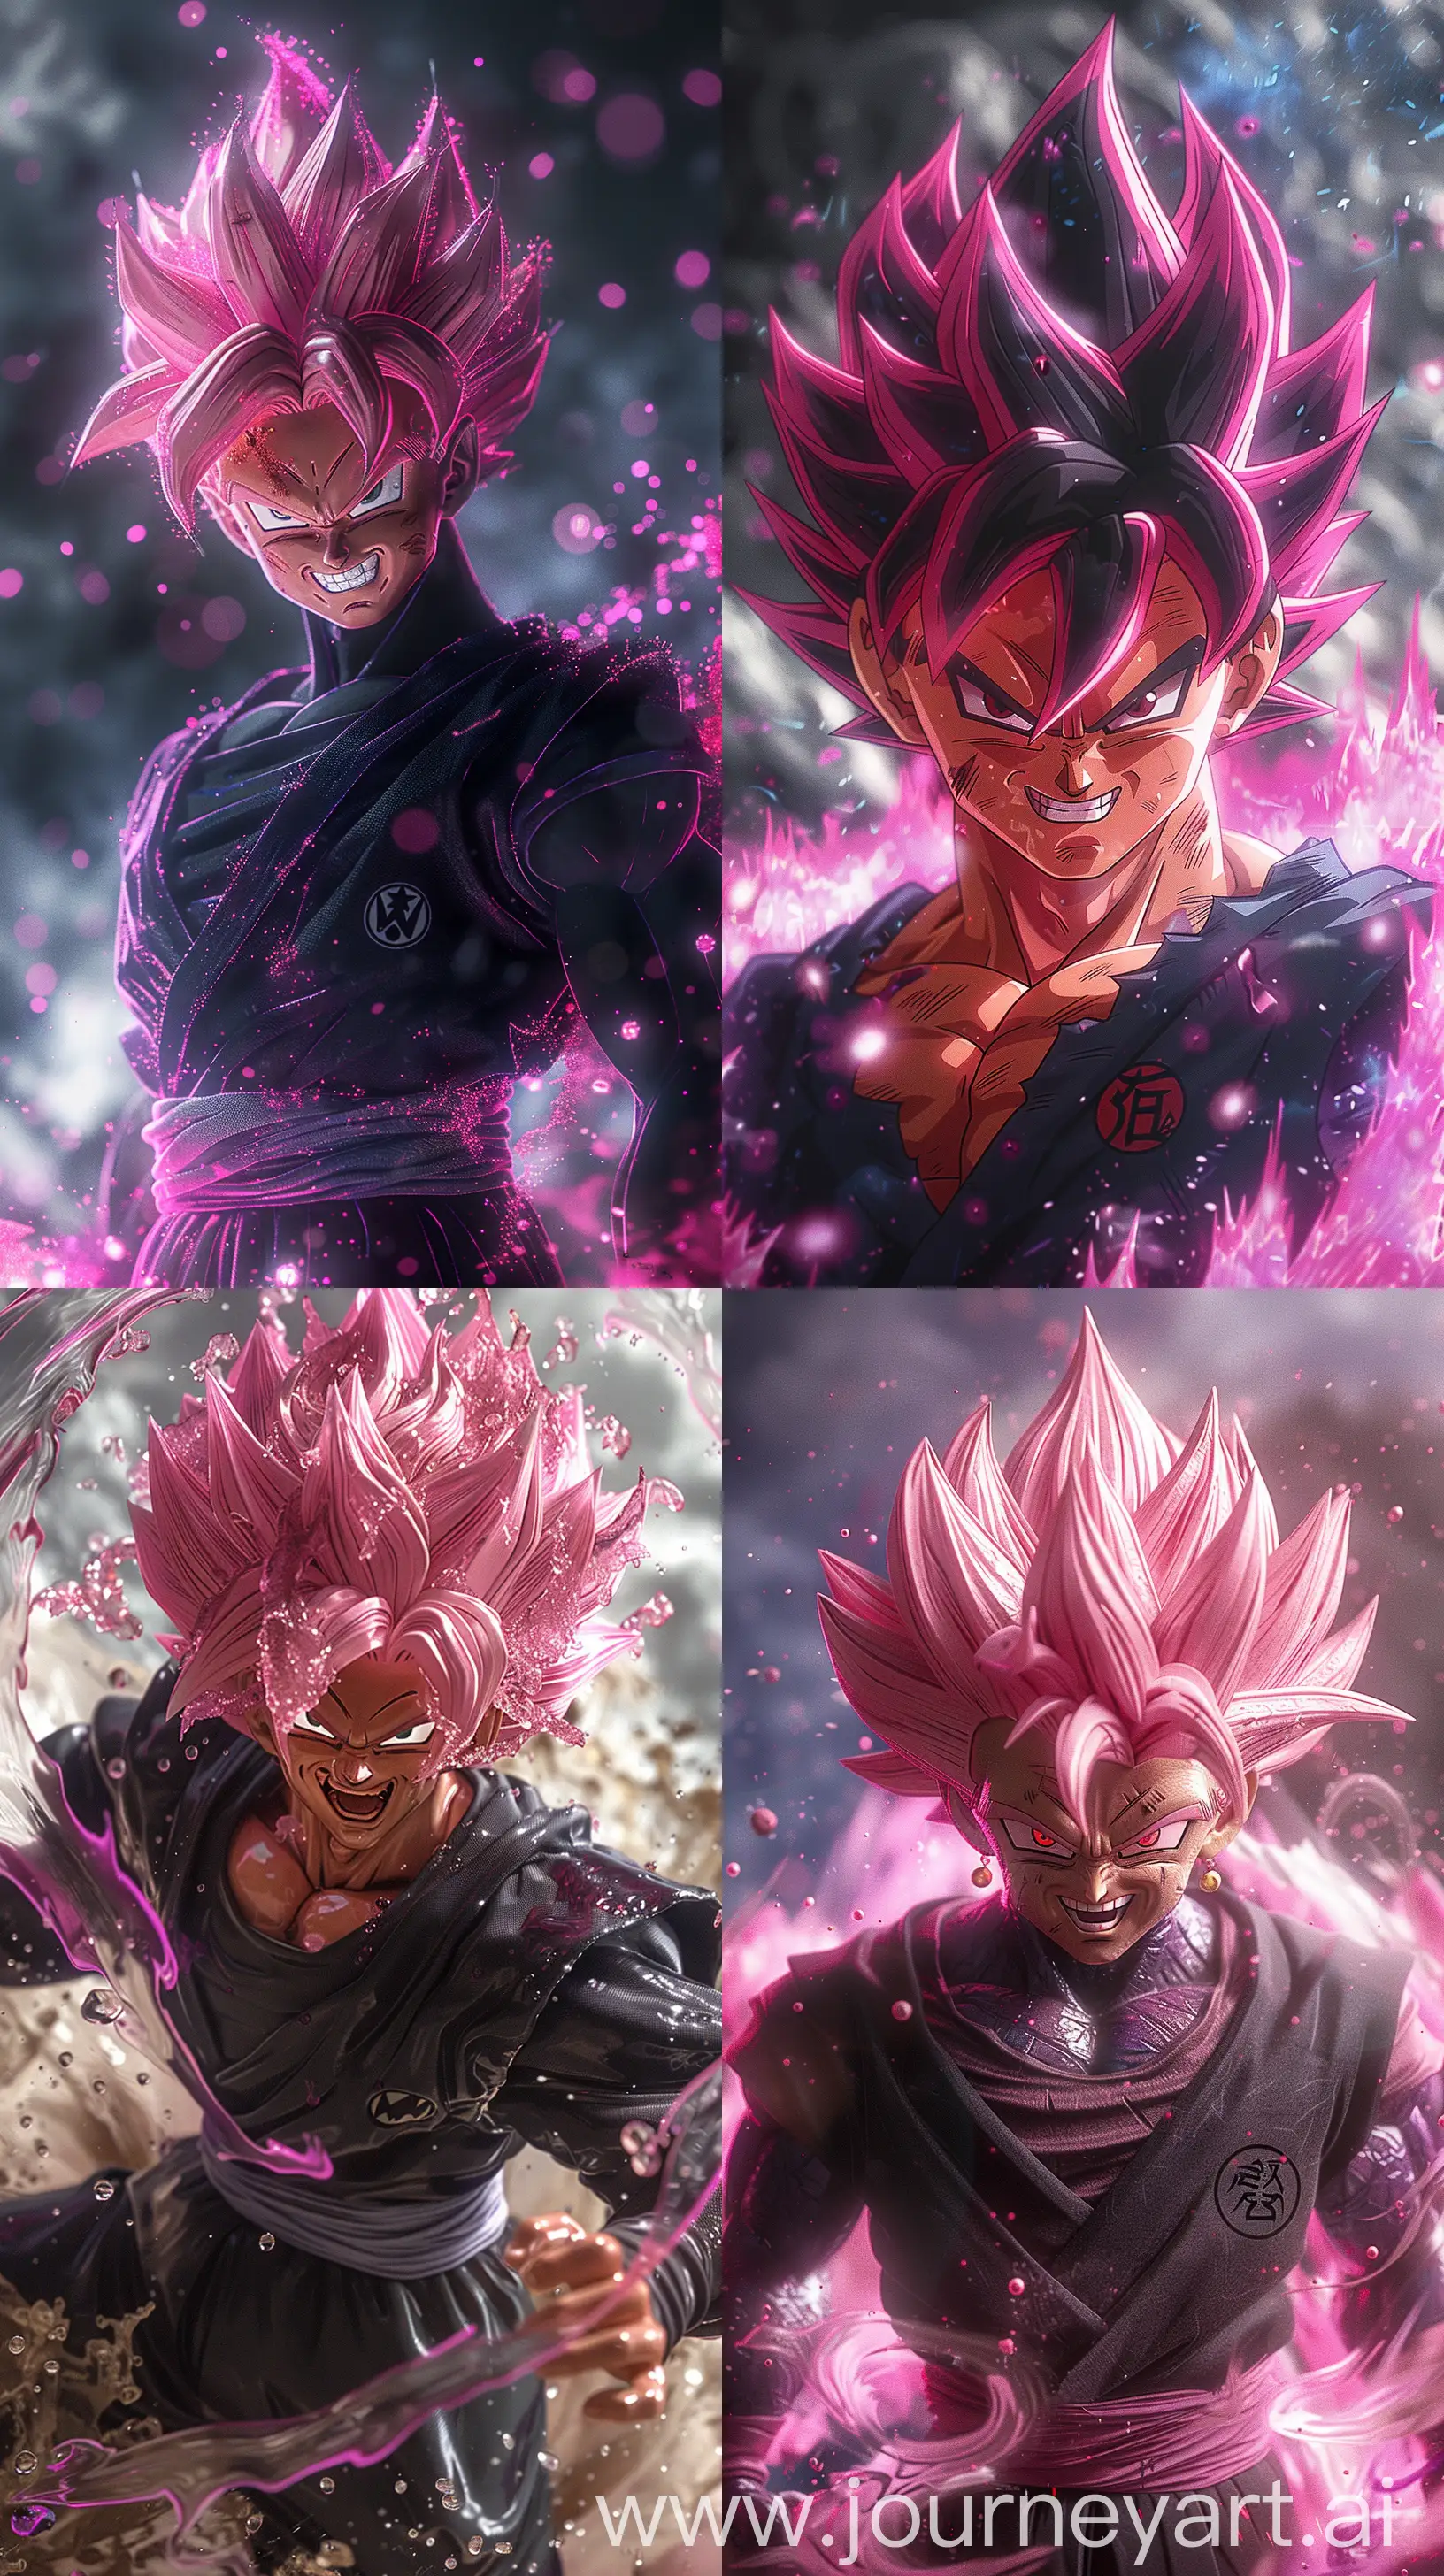 Villain-Goku-Black-in-Super-Saiyan-Ros-Form-with-Swirling-Aura